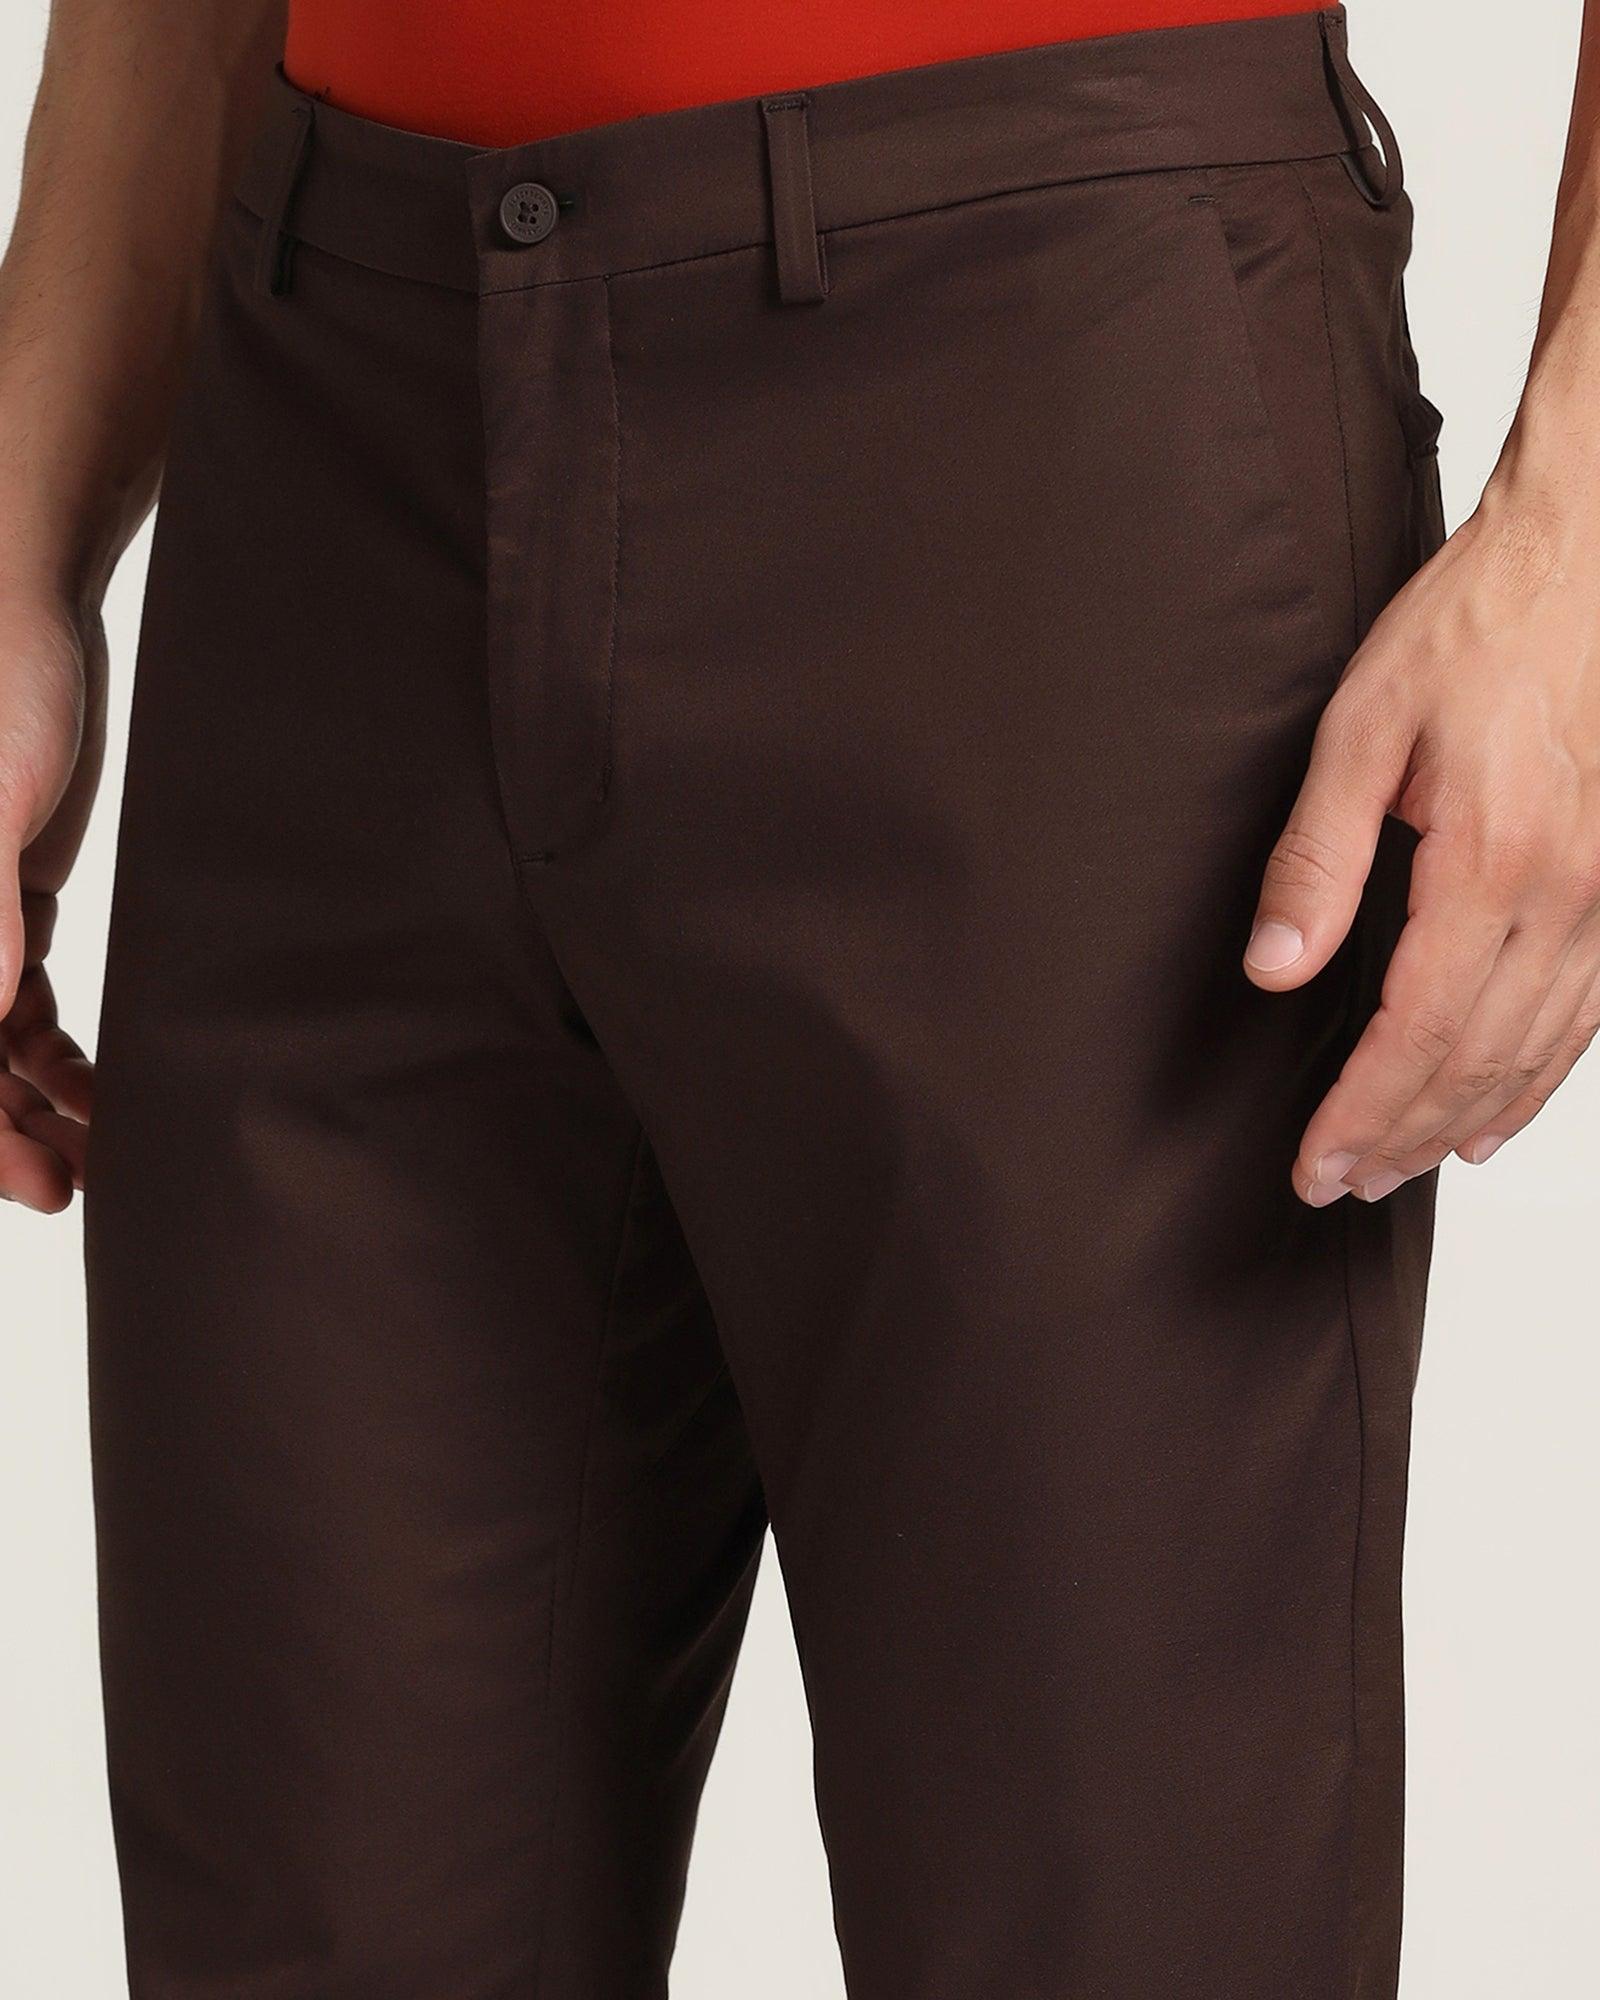 Stylish Carhartt Brown Cargo Pants